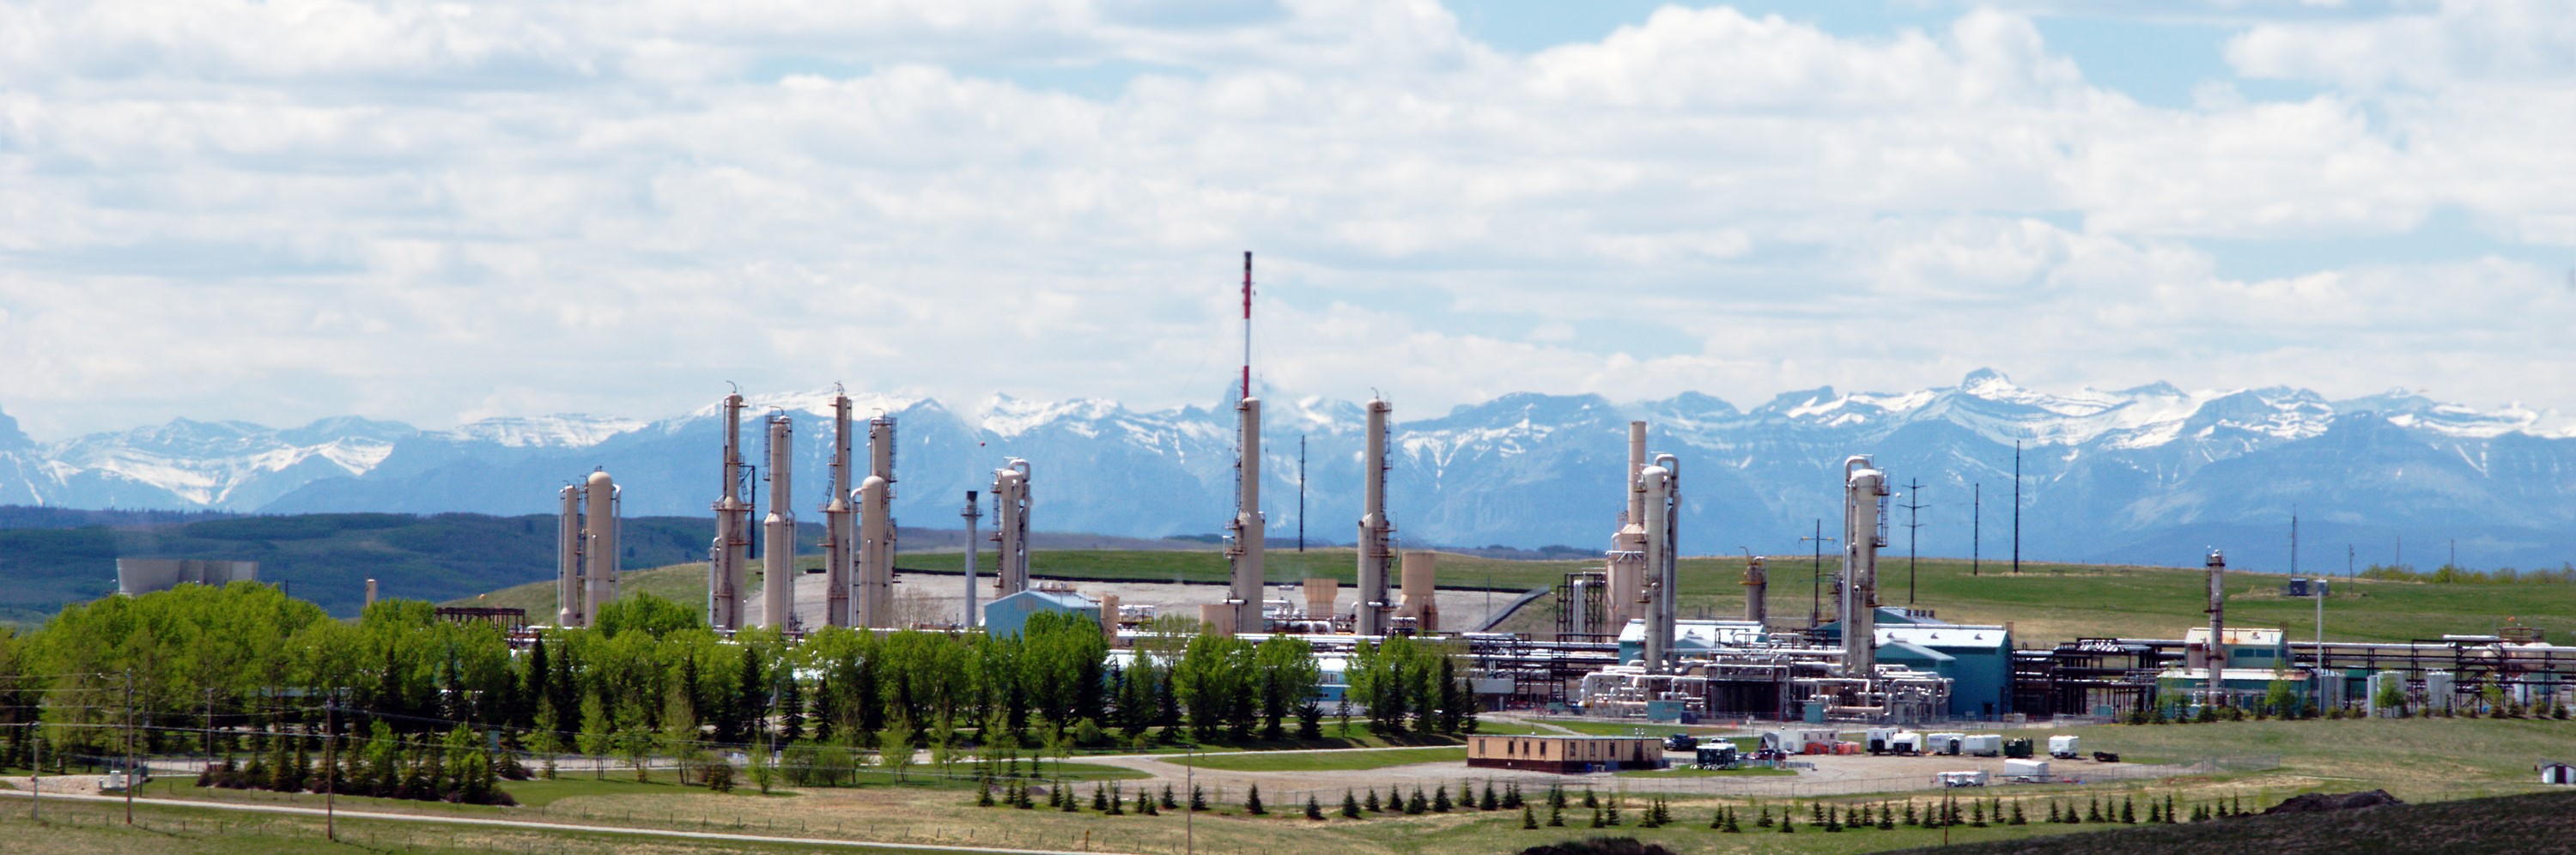 Canadian natural gas plant near Cochrane, Alberta.